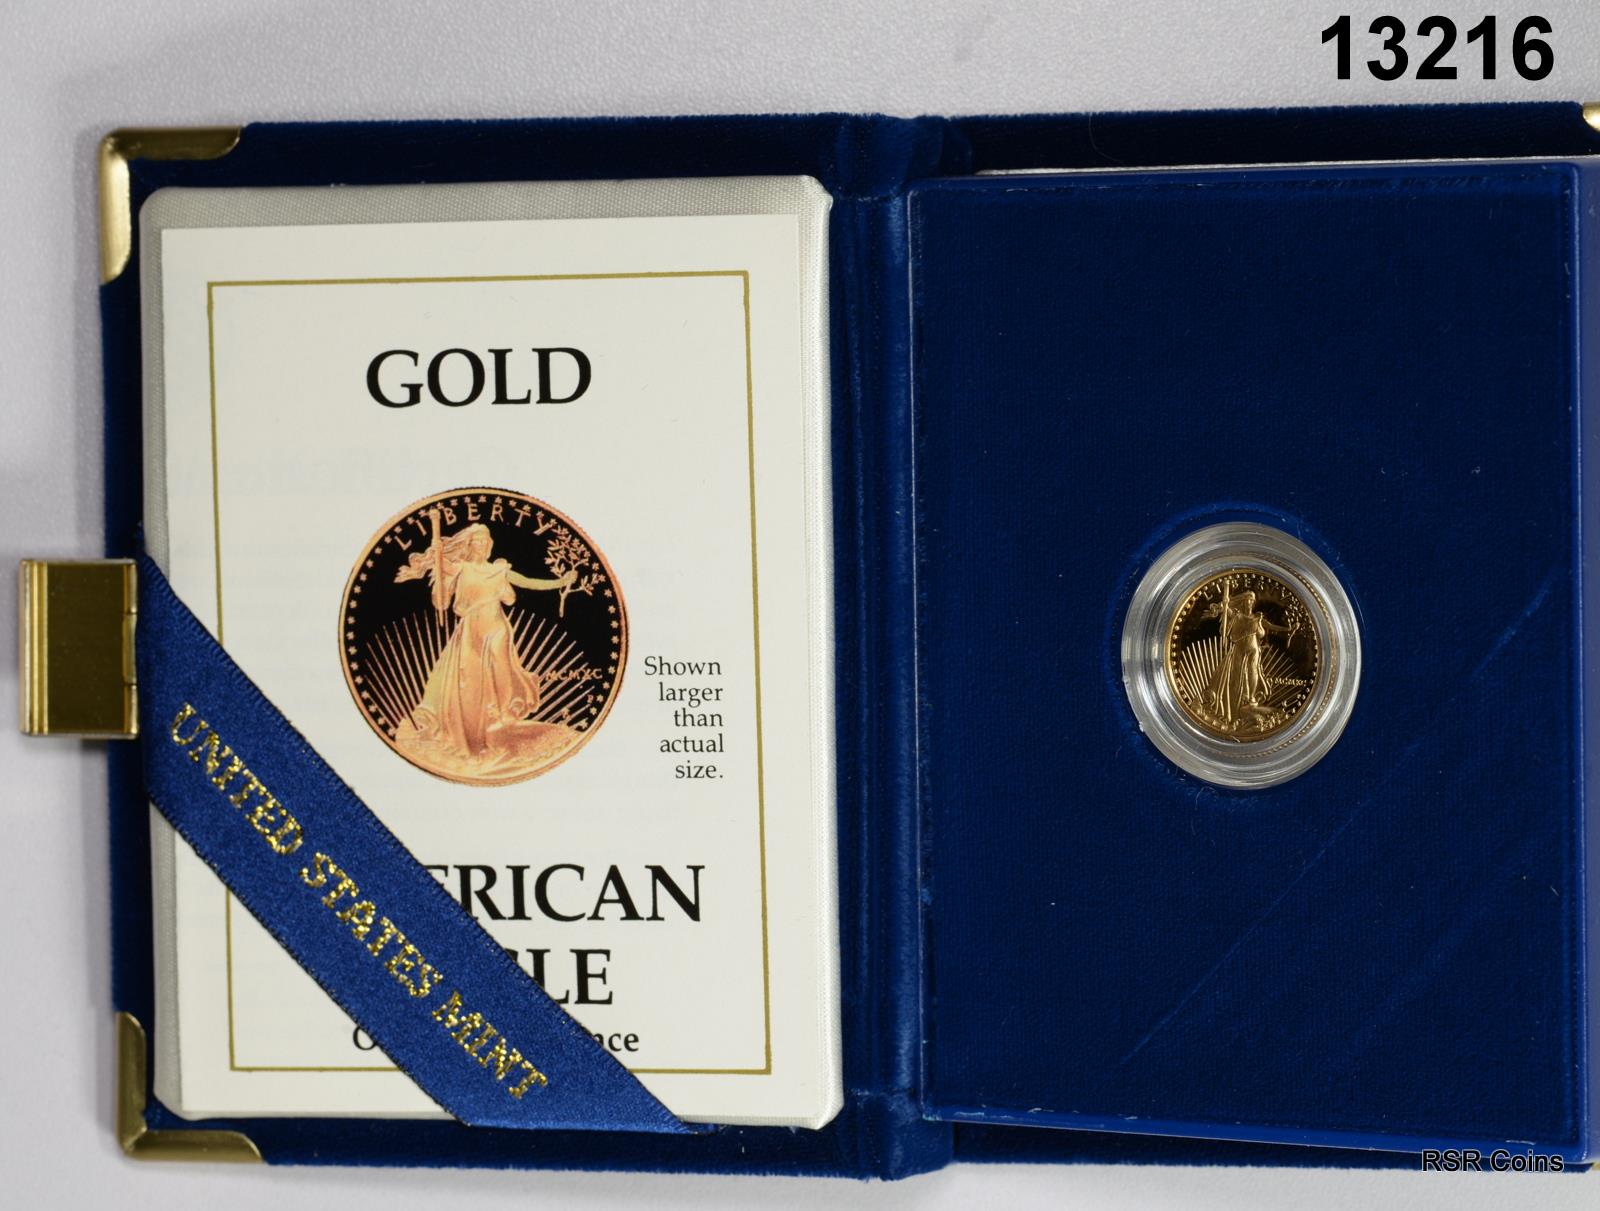 1990 1/10TH OZ $5 PROOF GOLD EAGLE ORIGINAL BOX & COA!! #13216